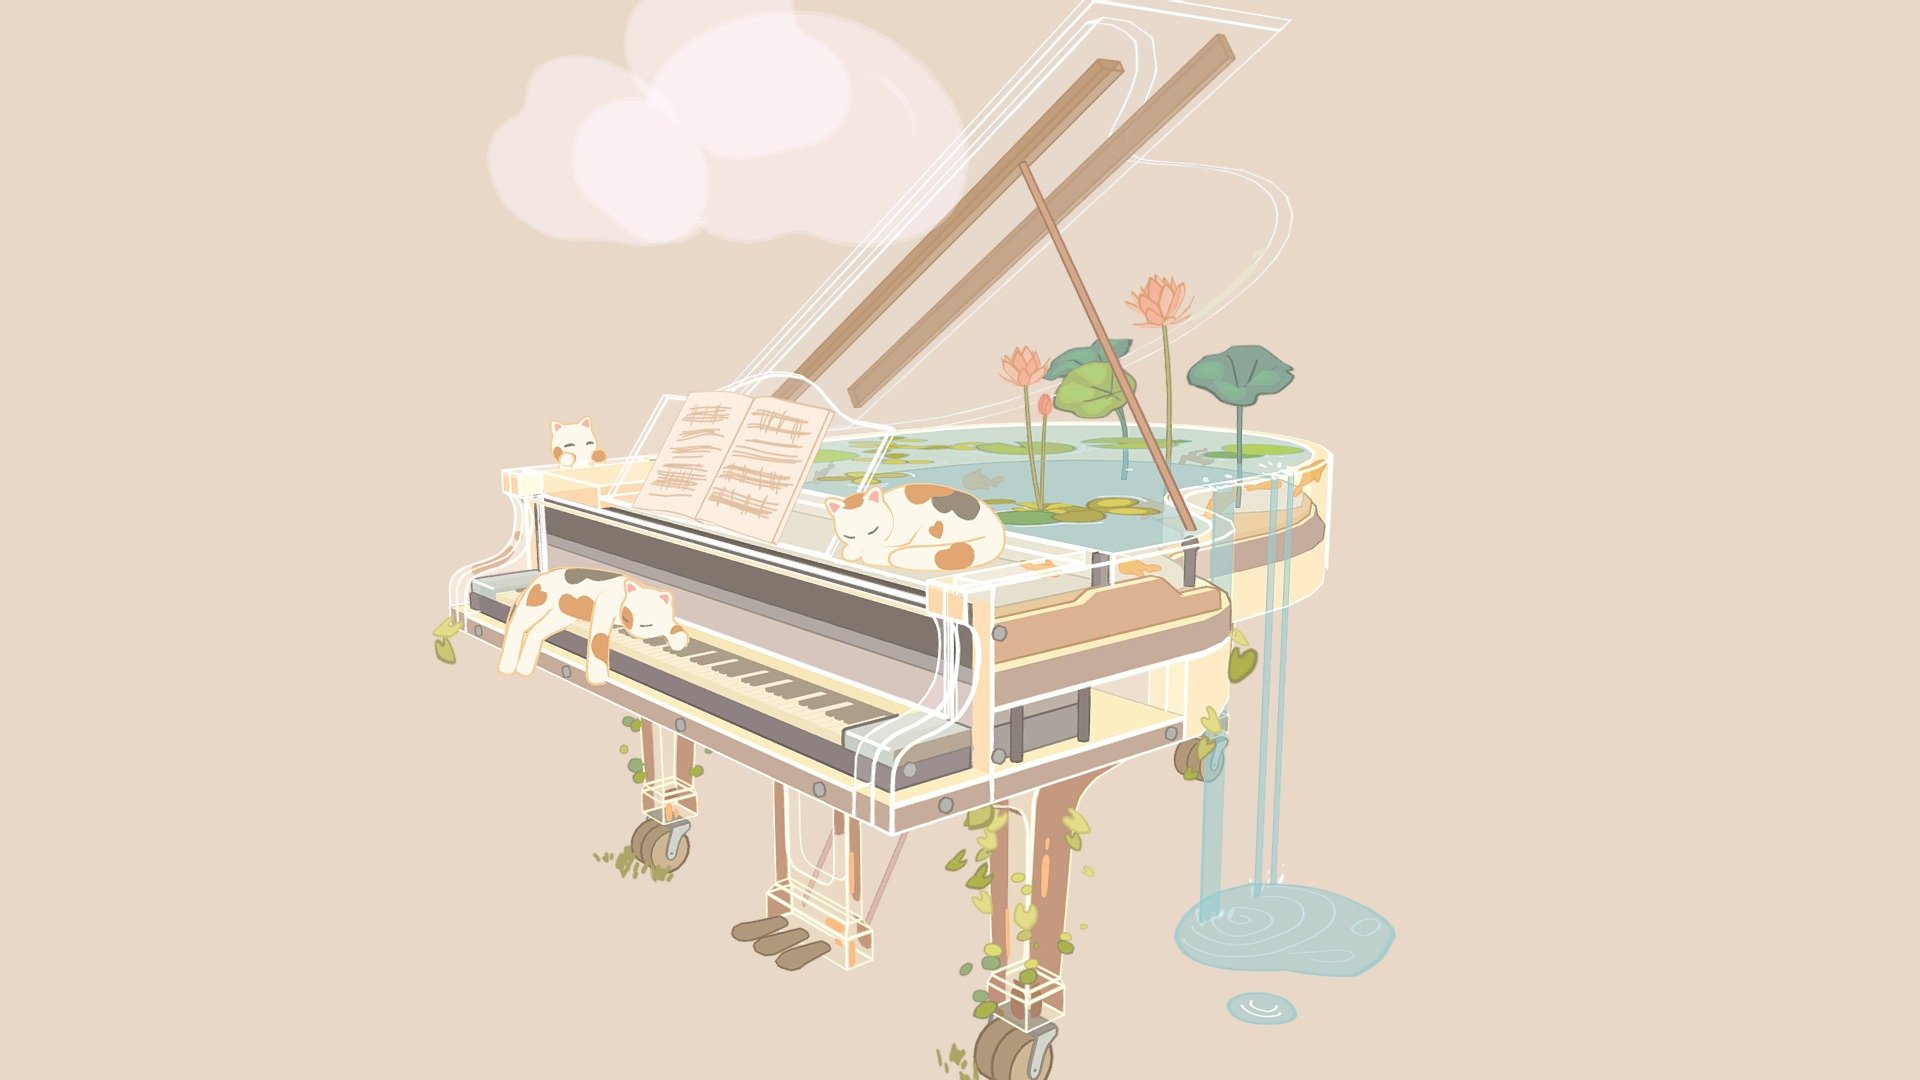 Original concept by Mu.andcoco on instagram 
https://www.instagram.com/p/CeTwZV0PSZv/ - Stylized piano - 3D model by Anastasia S. (@anastasia.3s) 3d model